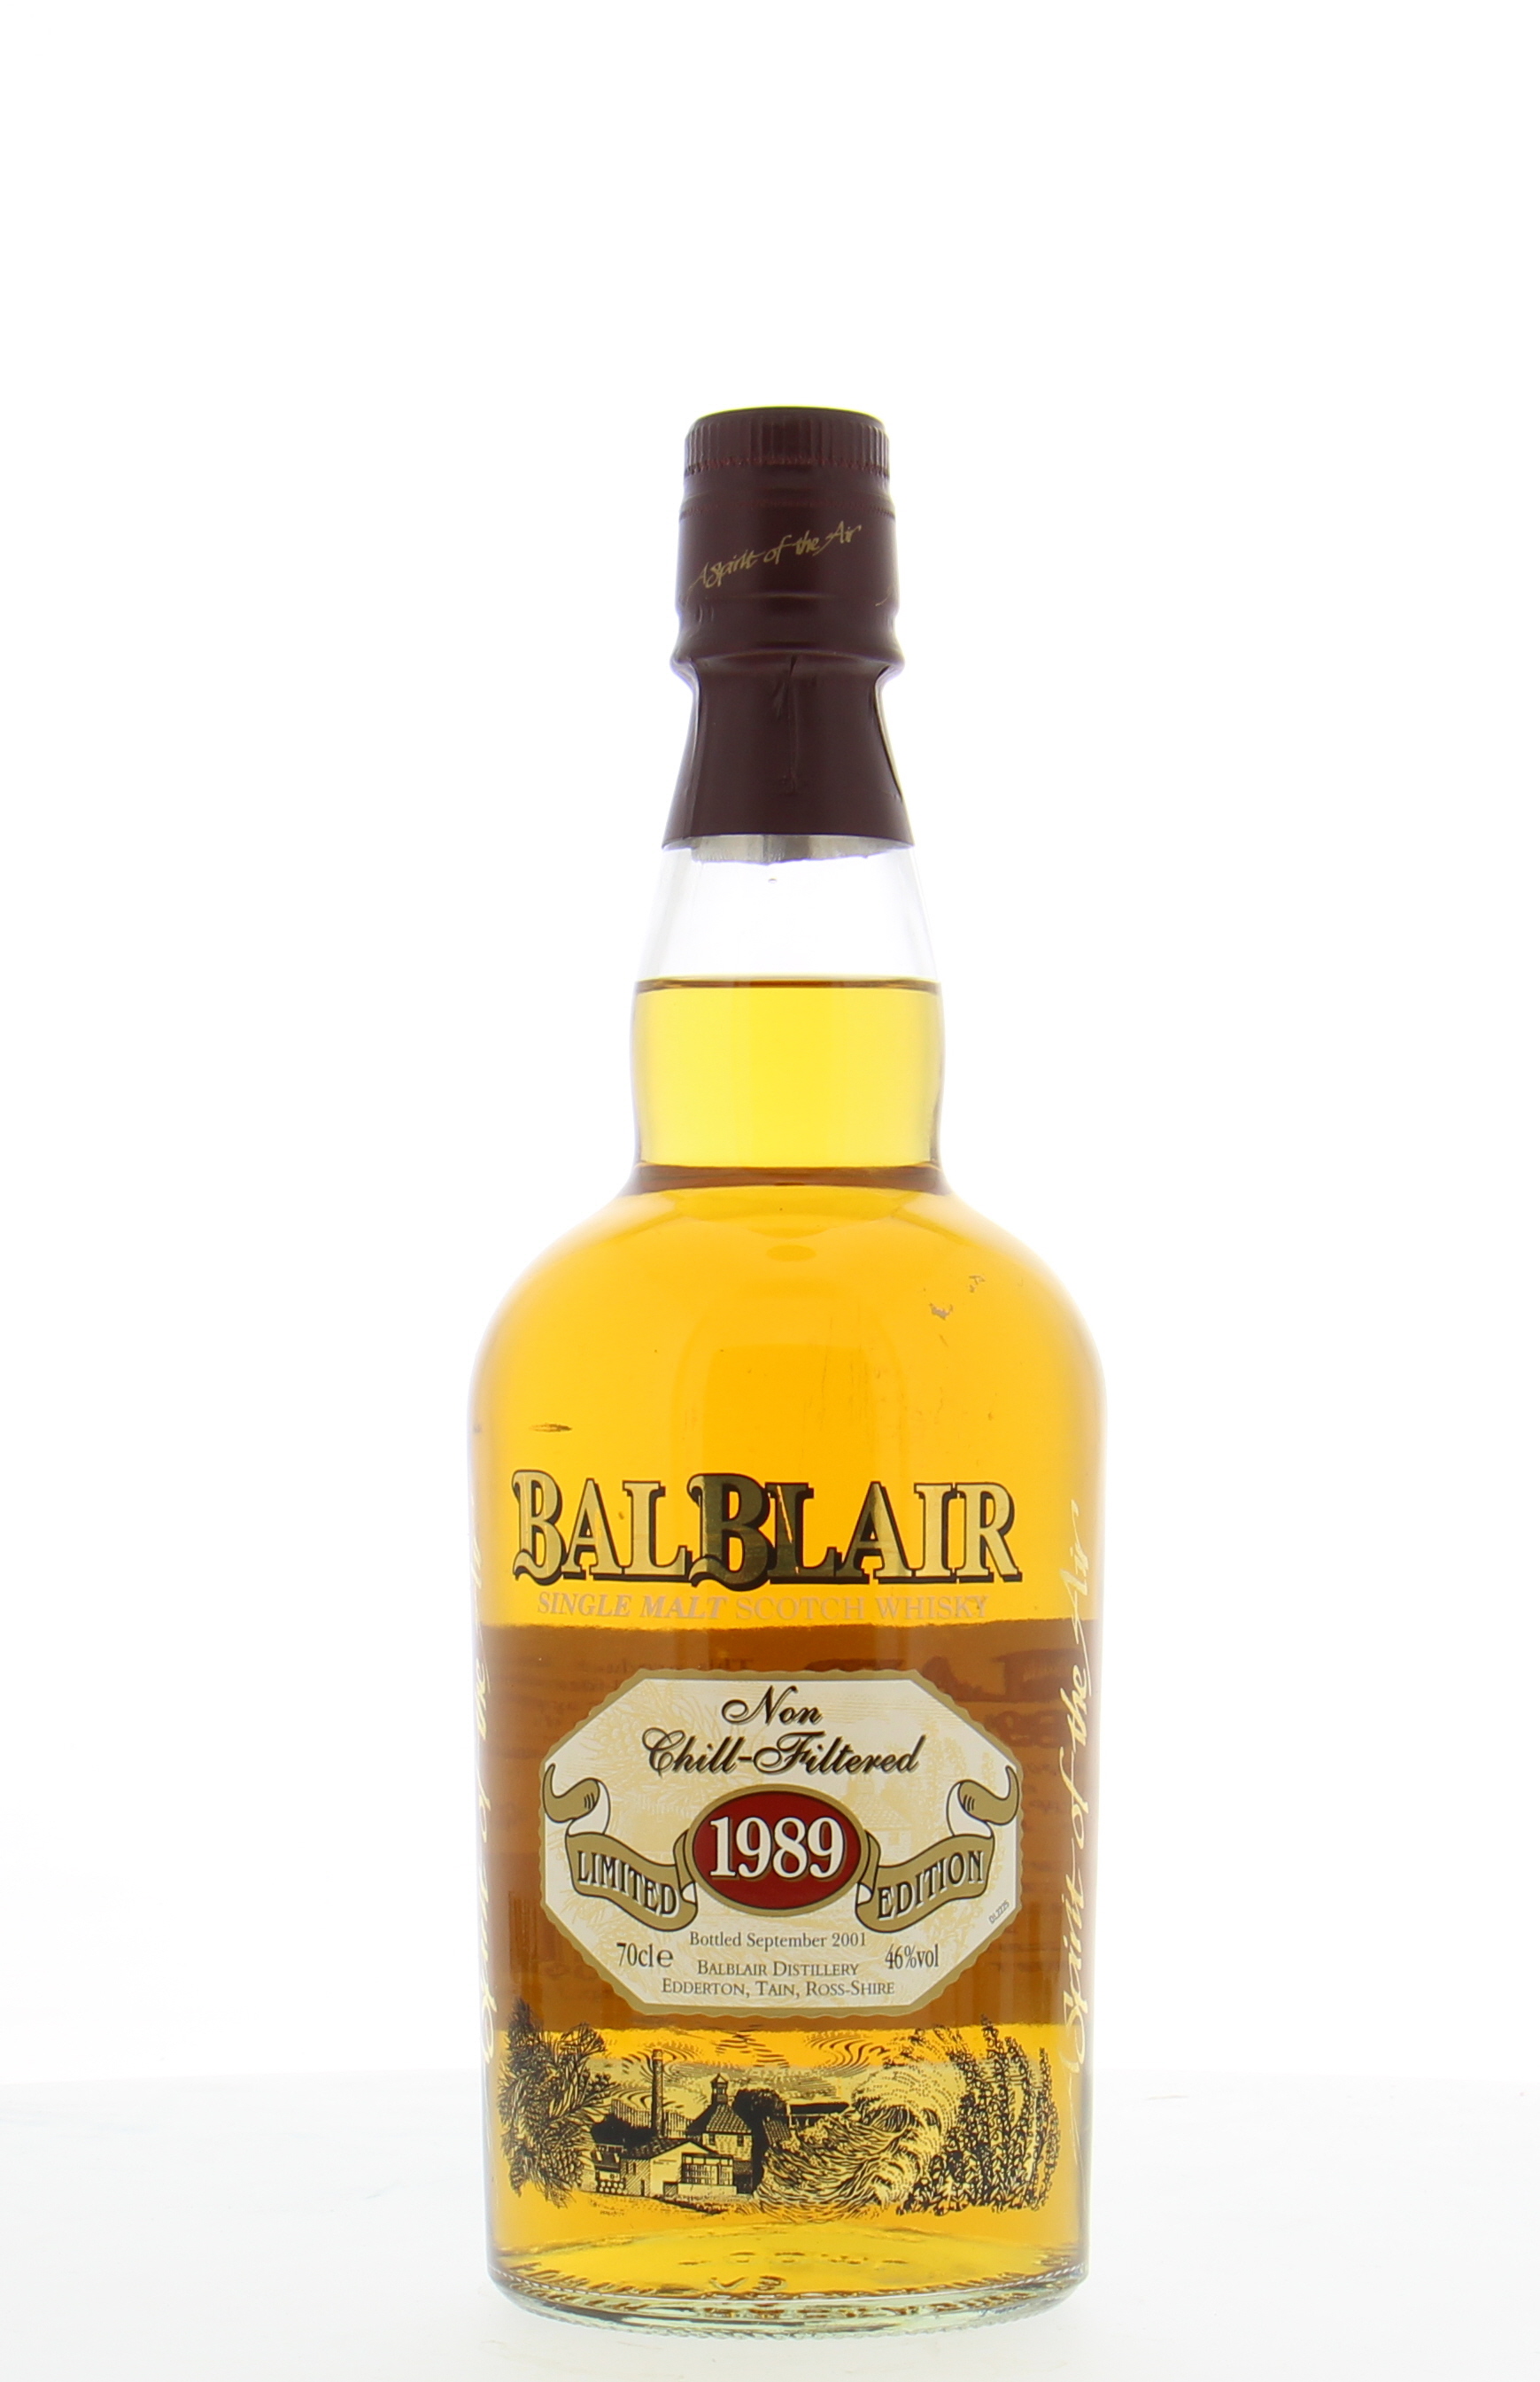 Balblair - 1989 Limited Edition 46% 1989 No Original Box included